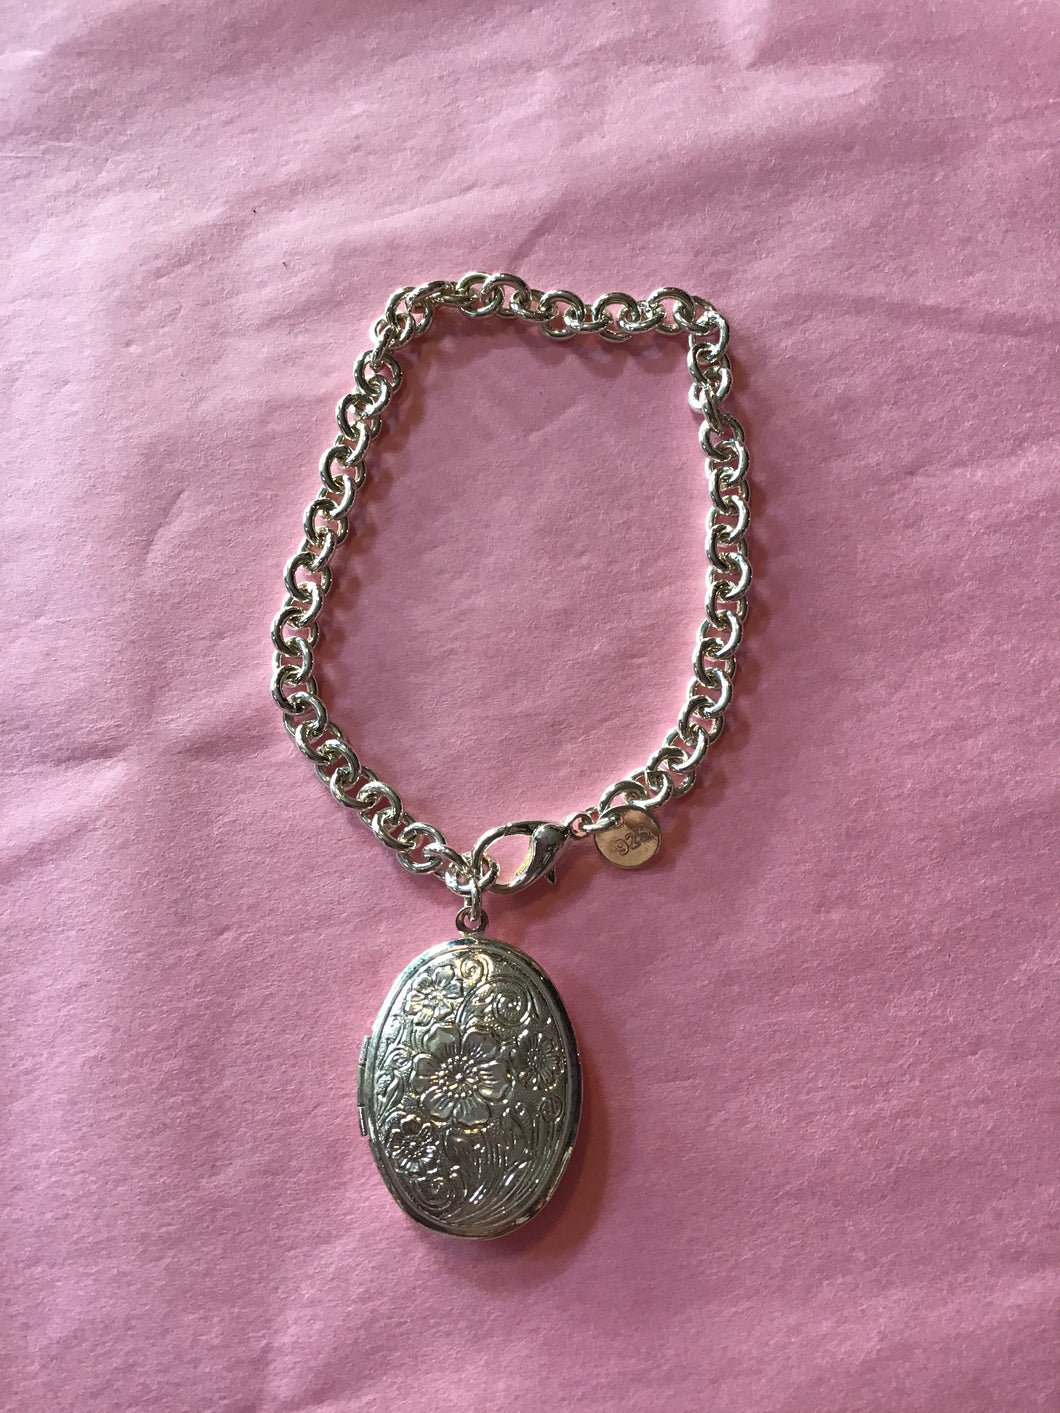 Silver Bracelet with Locket